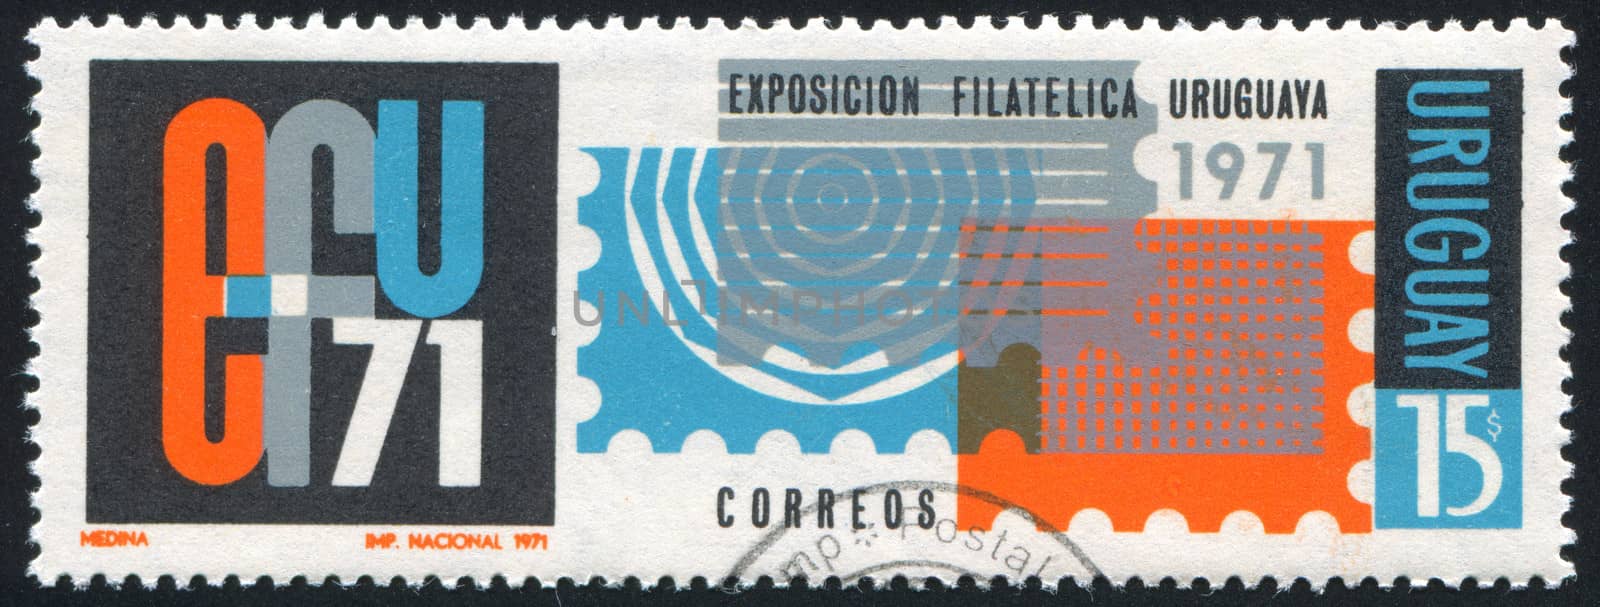 URUGUAY - CIRCA 1971: stamp printed by Uruguay, shows Exposition Poster, circa 1971